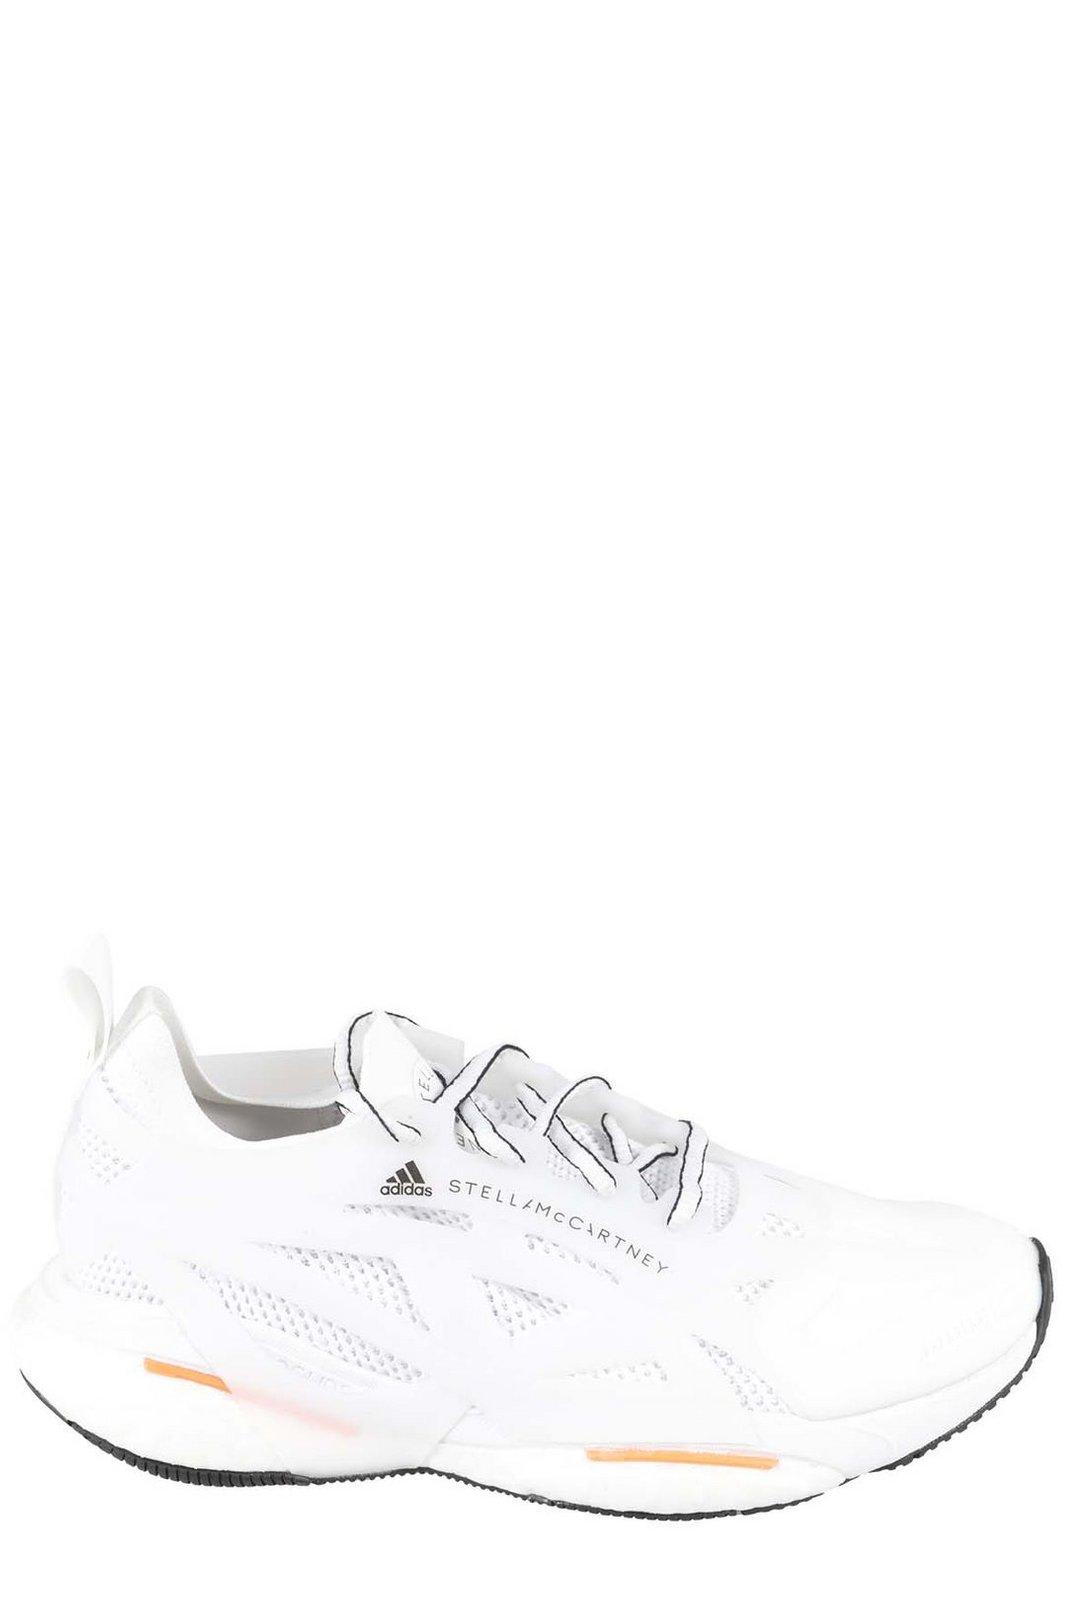 Shop Adidas By Stella Mccartney Solarglide Low-top Sneakers In Ftwwht/ftwwht/cblack